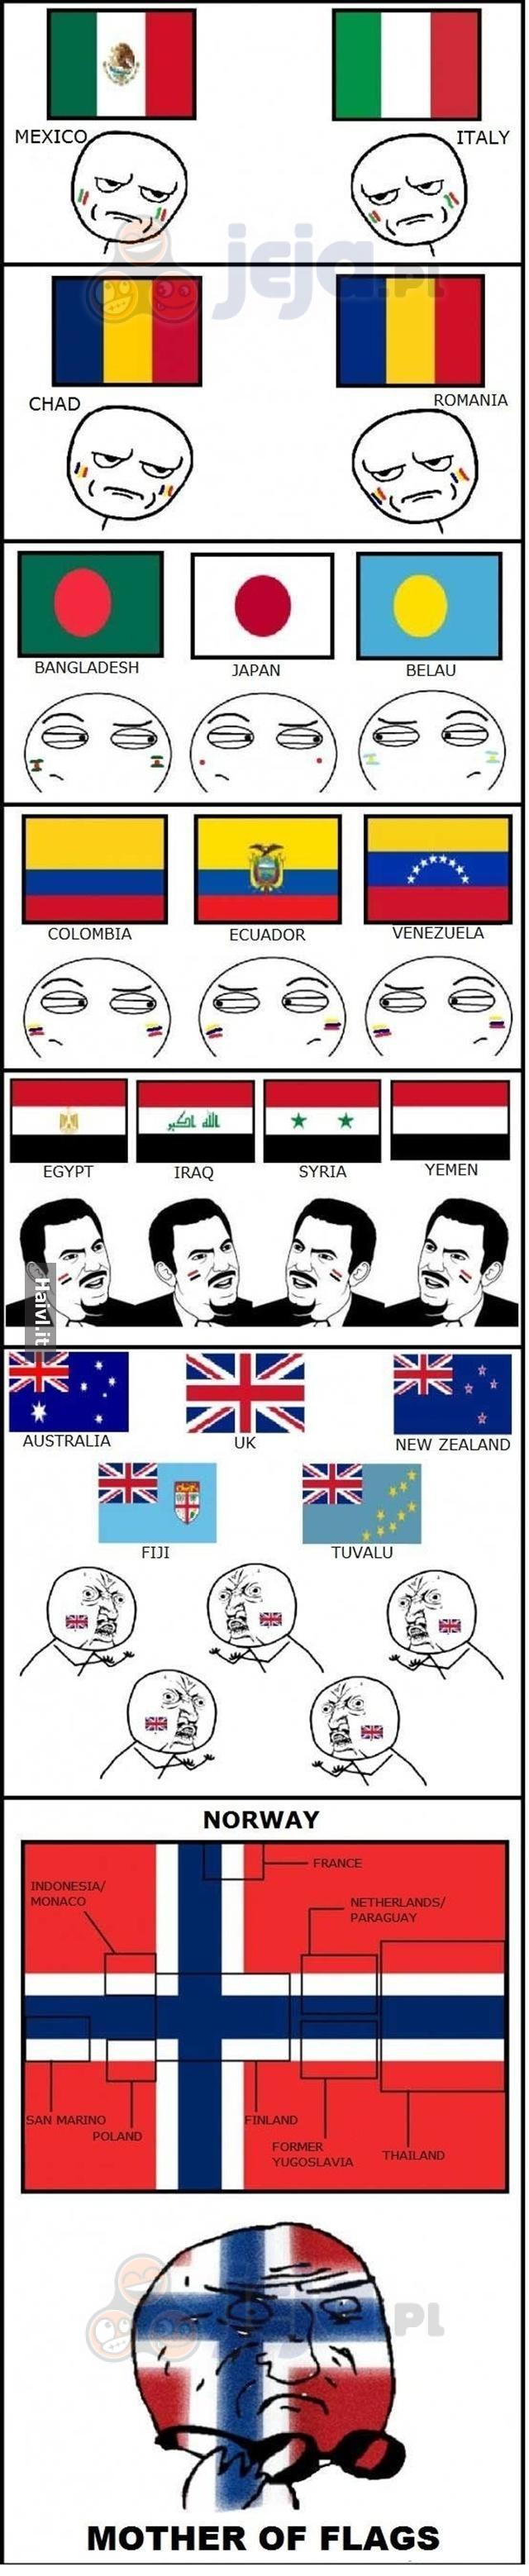 Podobne flagi